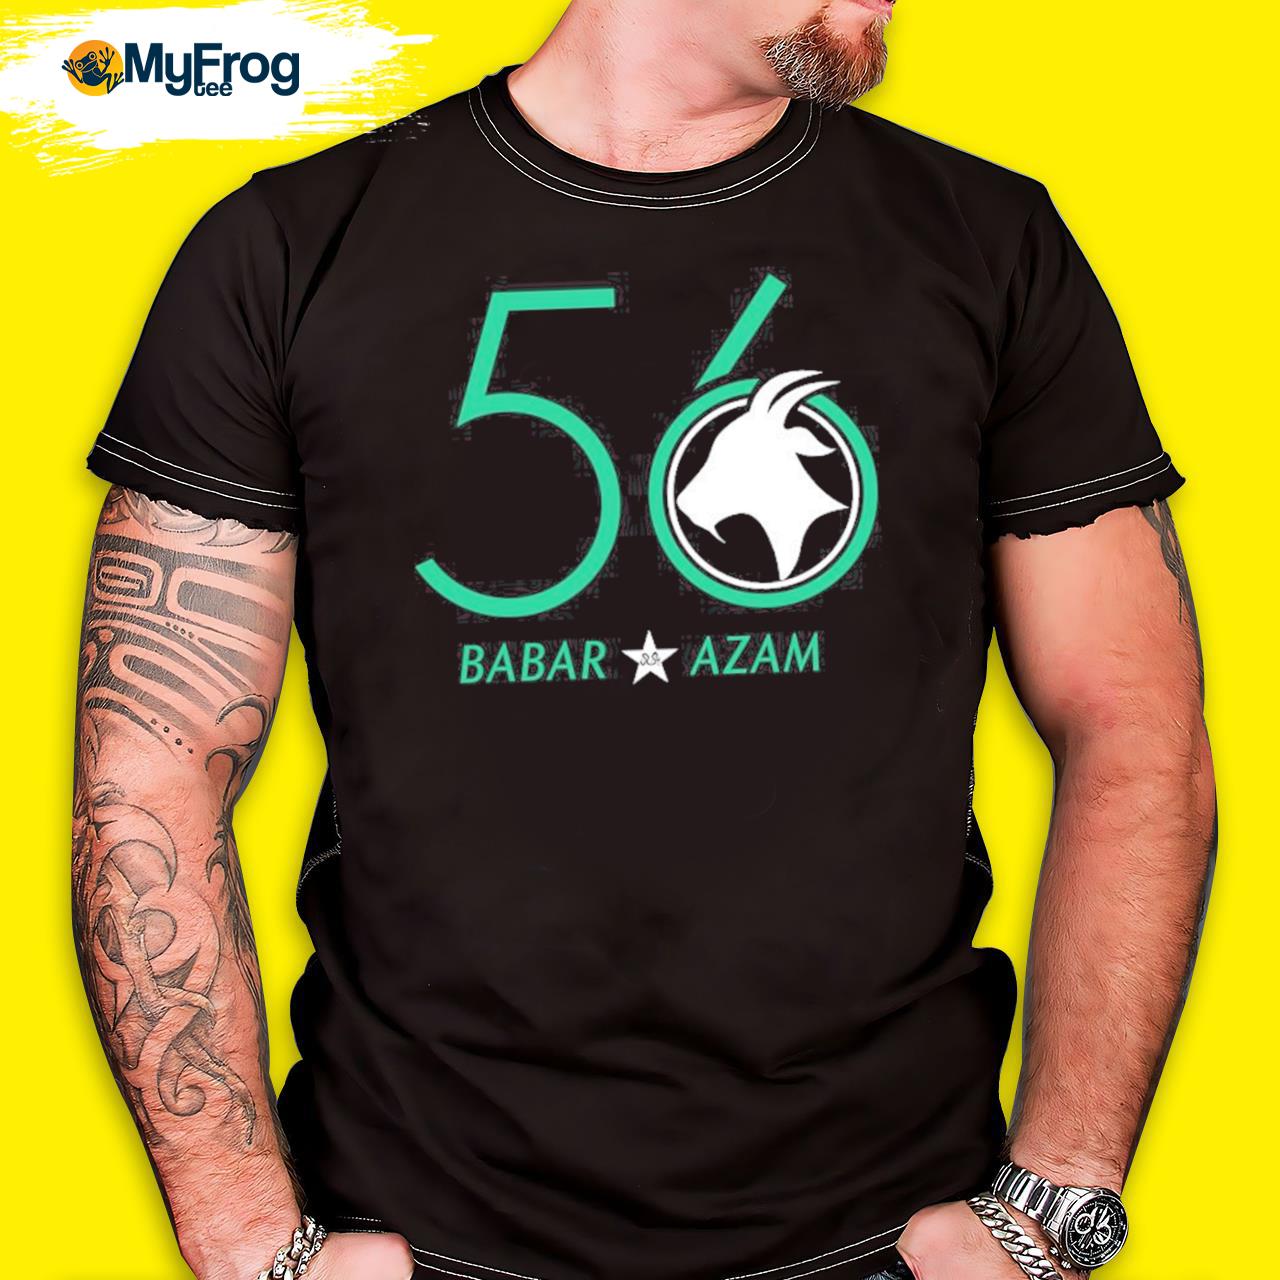 56 goat babar azam shirt, hoodie, and long sleeve